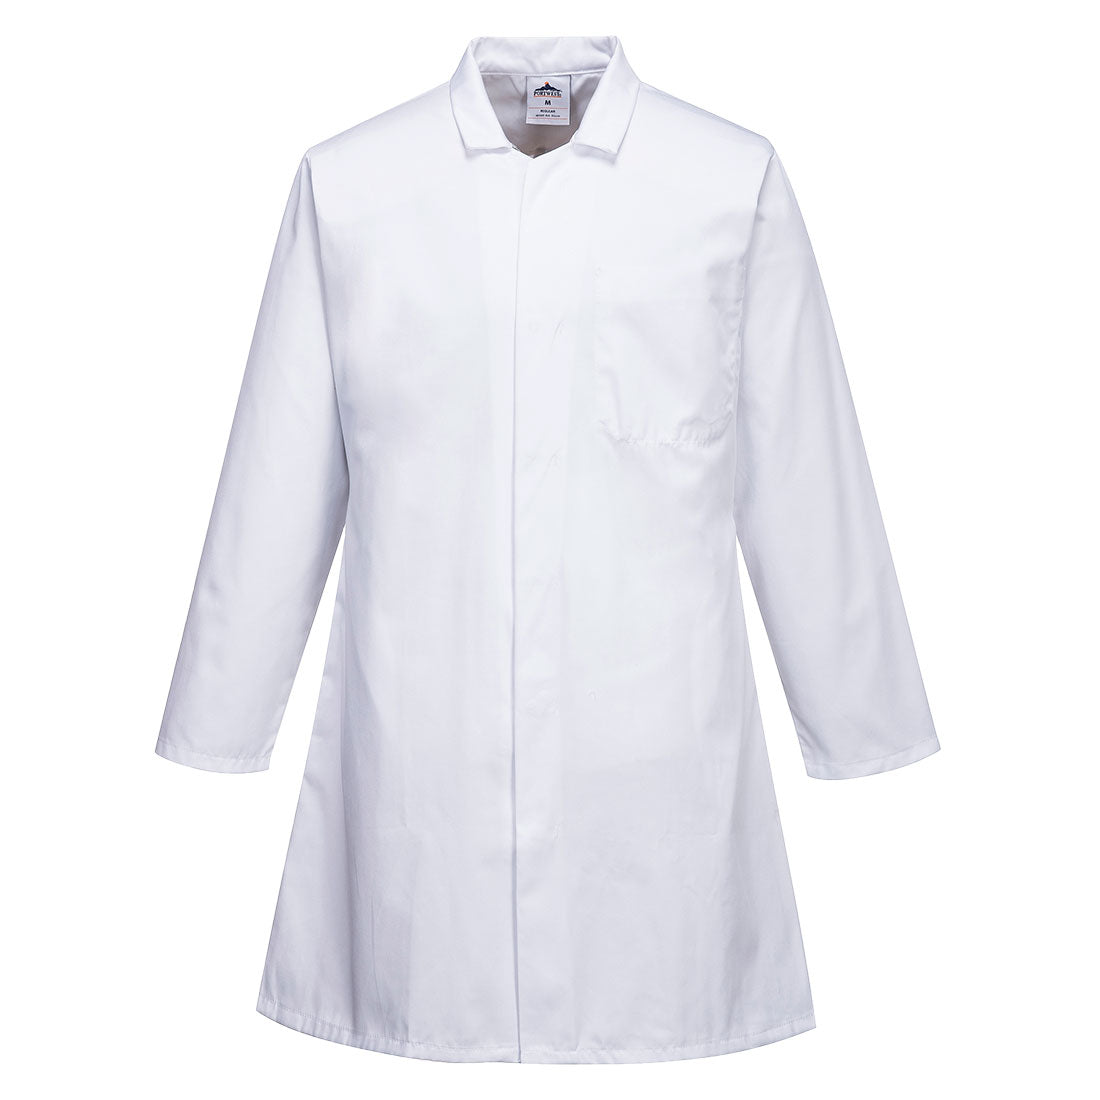 Portwest 2206 - White Mens Food Industry Coat, 3 Pockets sz Medium Regular Apron jacket